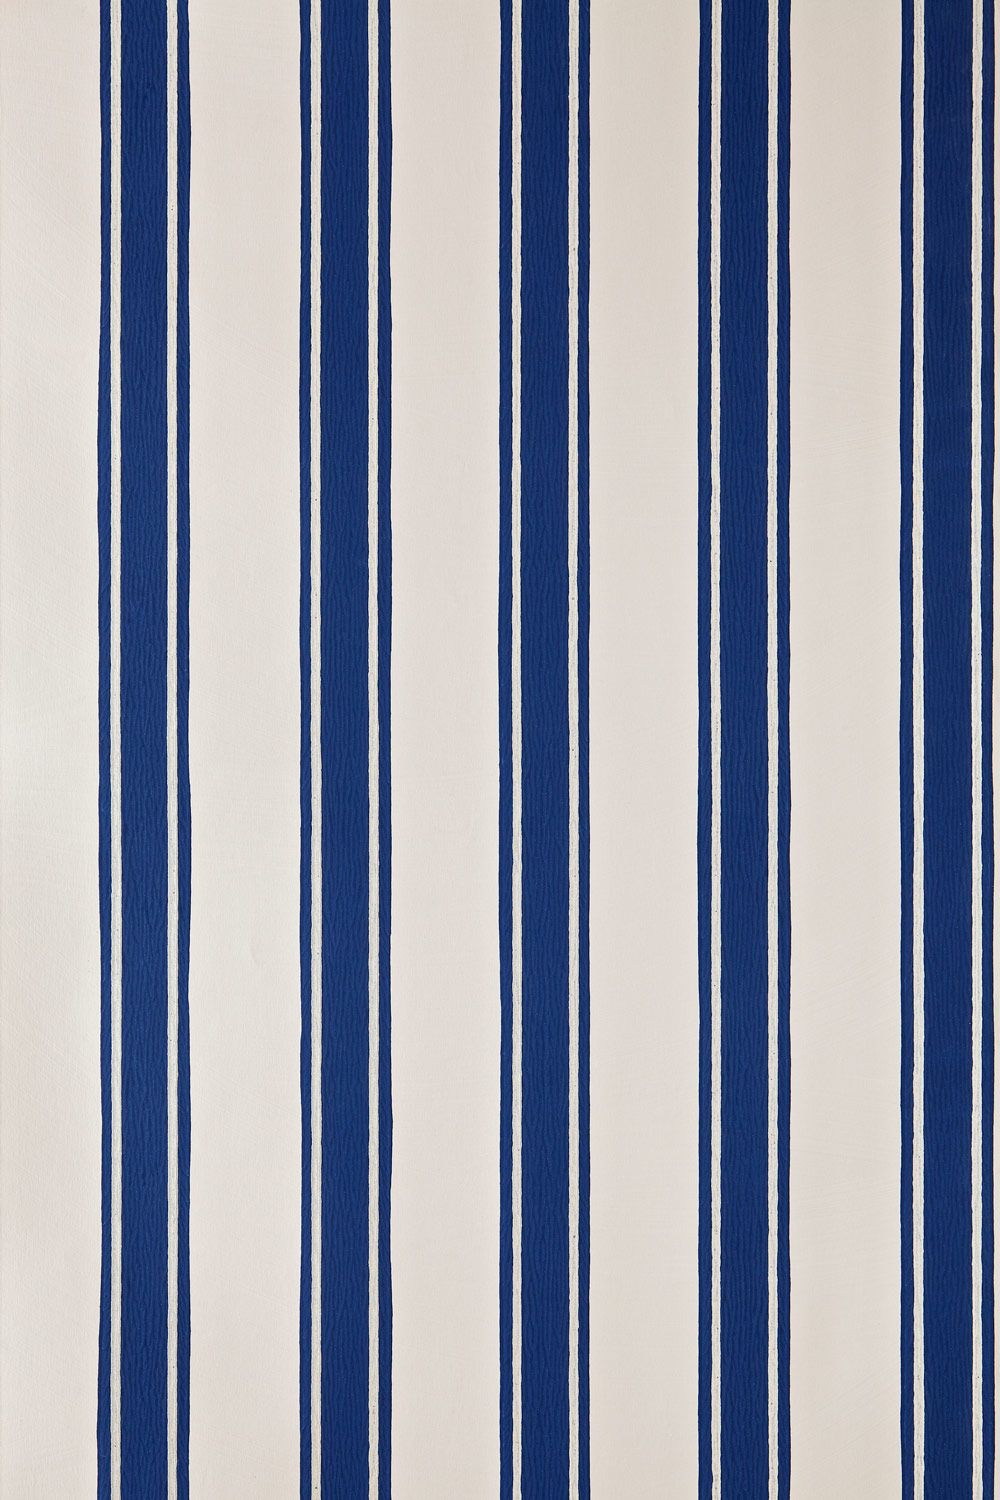 free wallpaper samples b&q,cobalt blue,blue,electric blue,line,pattern